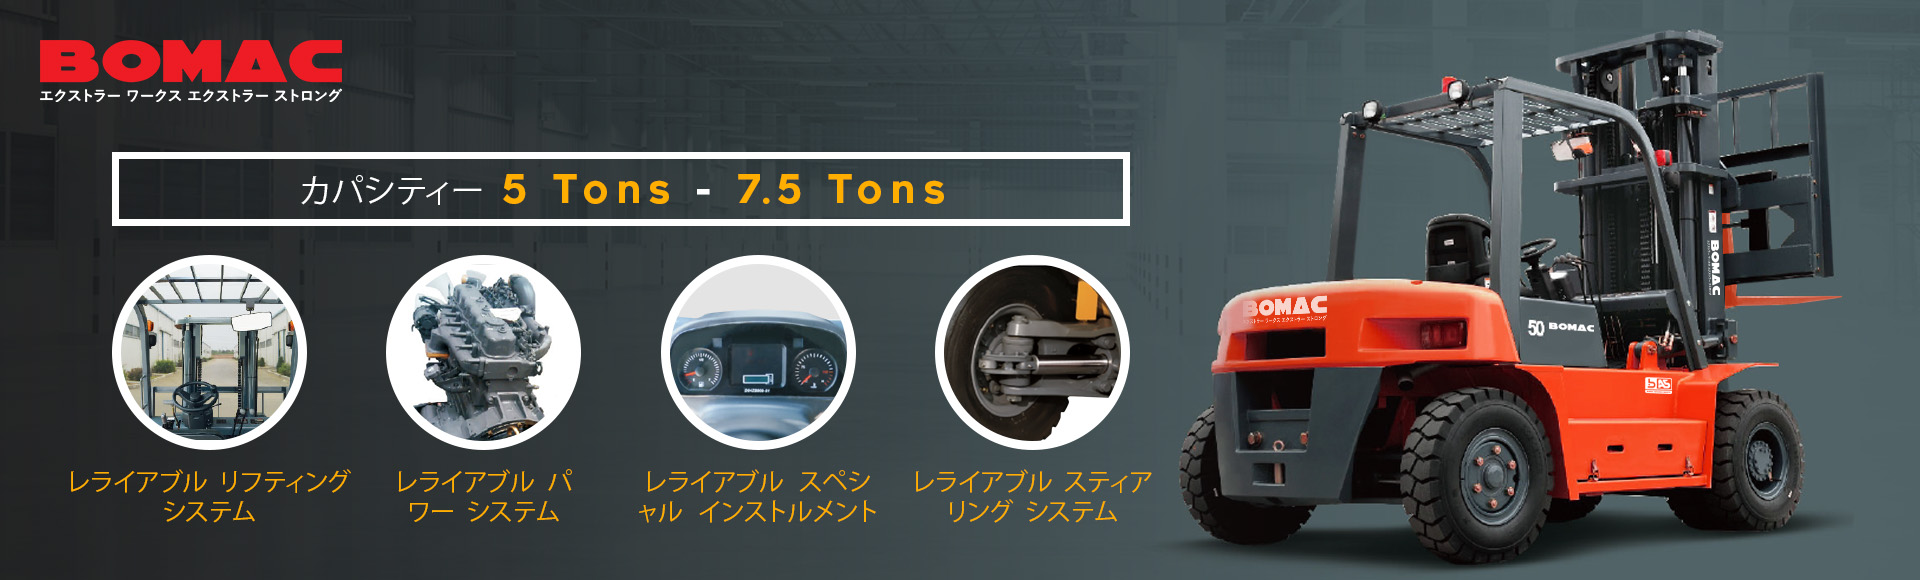 Banner Bomac Forklift Japan 5 TON - 7.5 TON Japan Ver 2